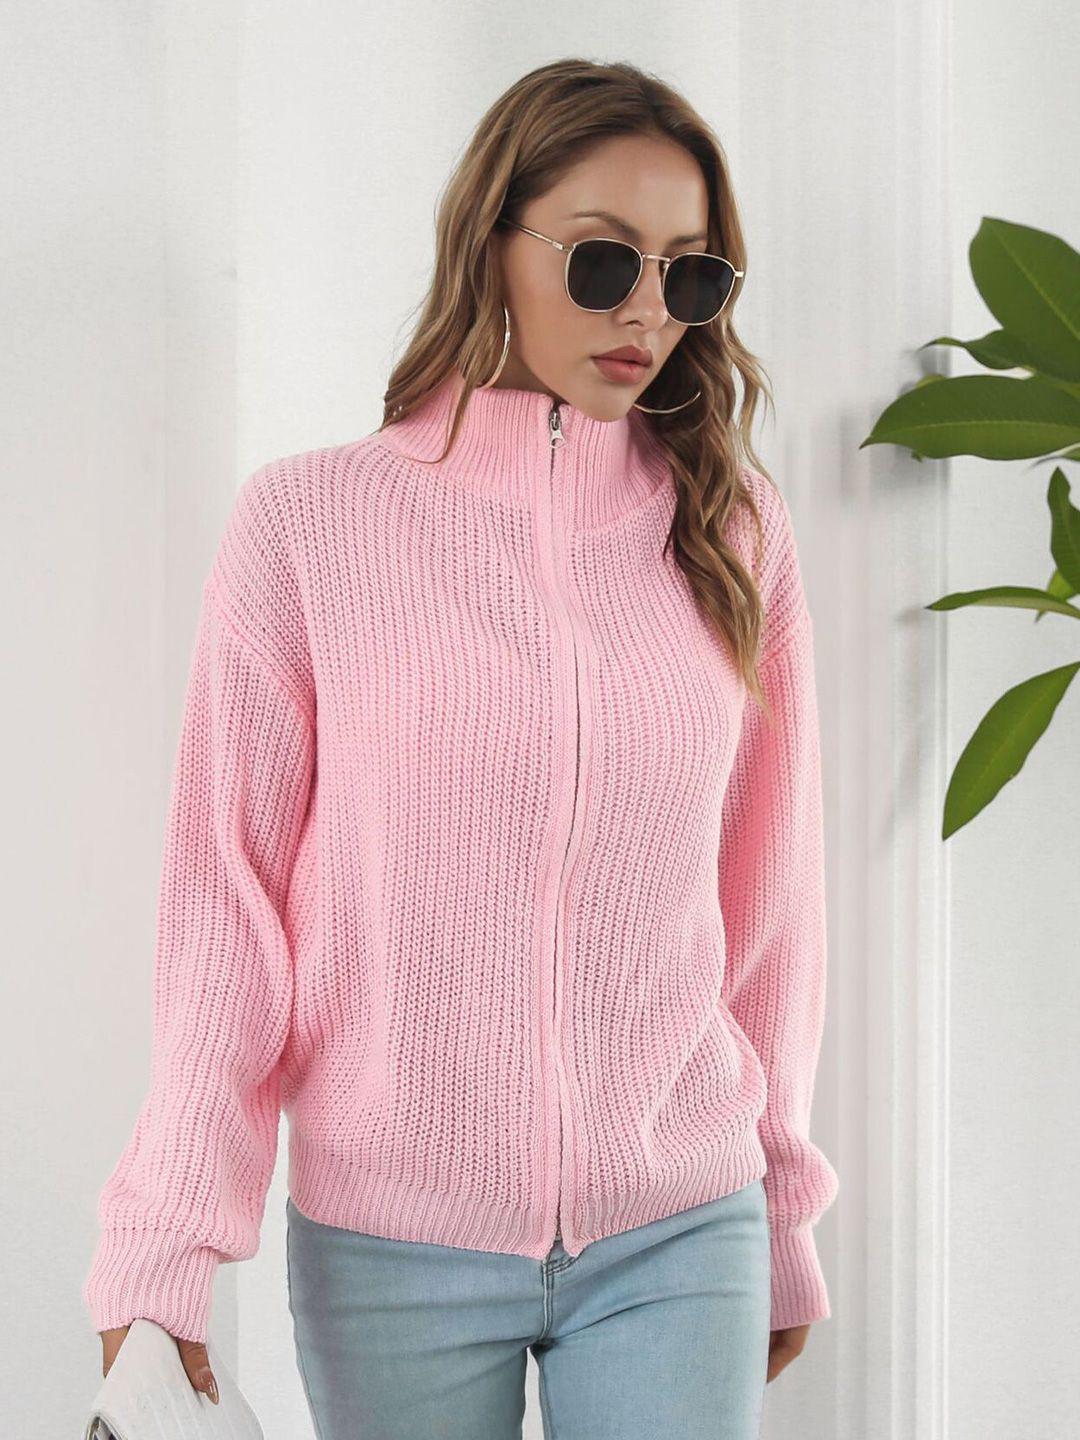 stylecast women pink cardigan sweater